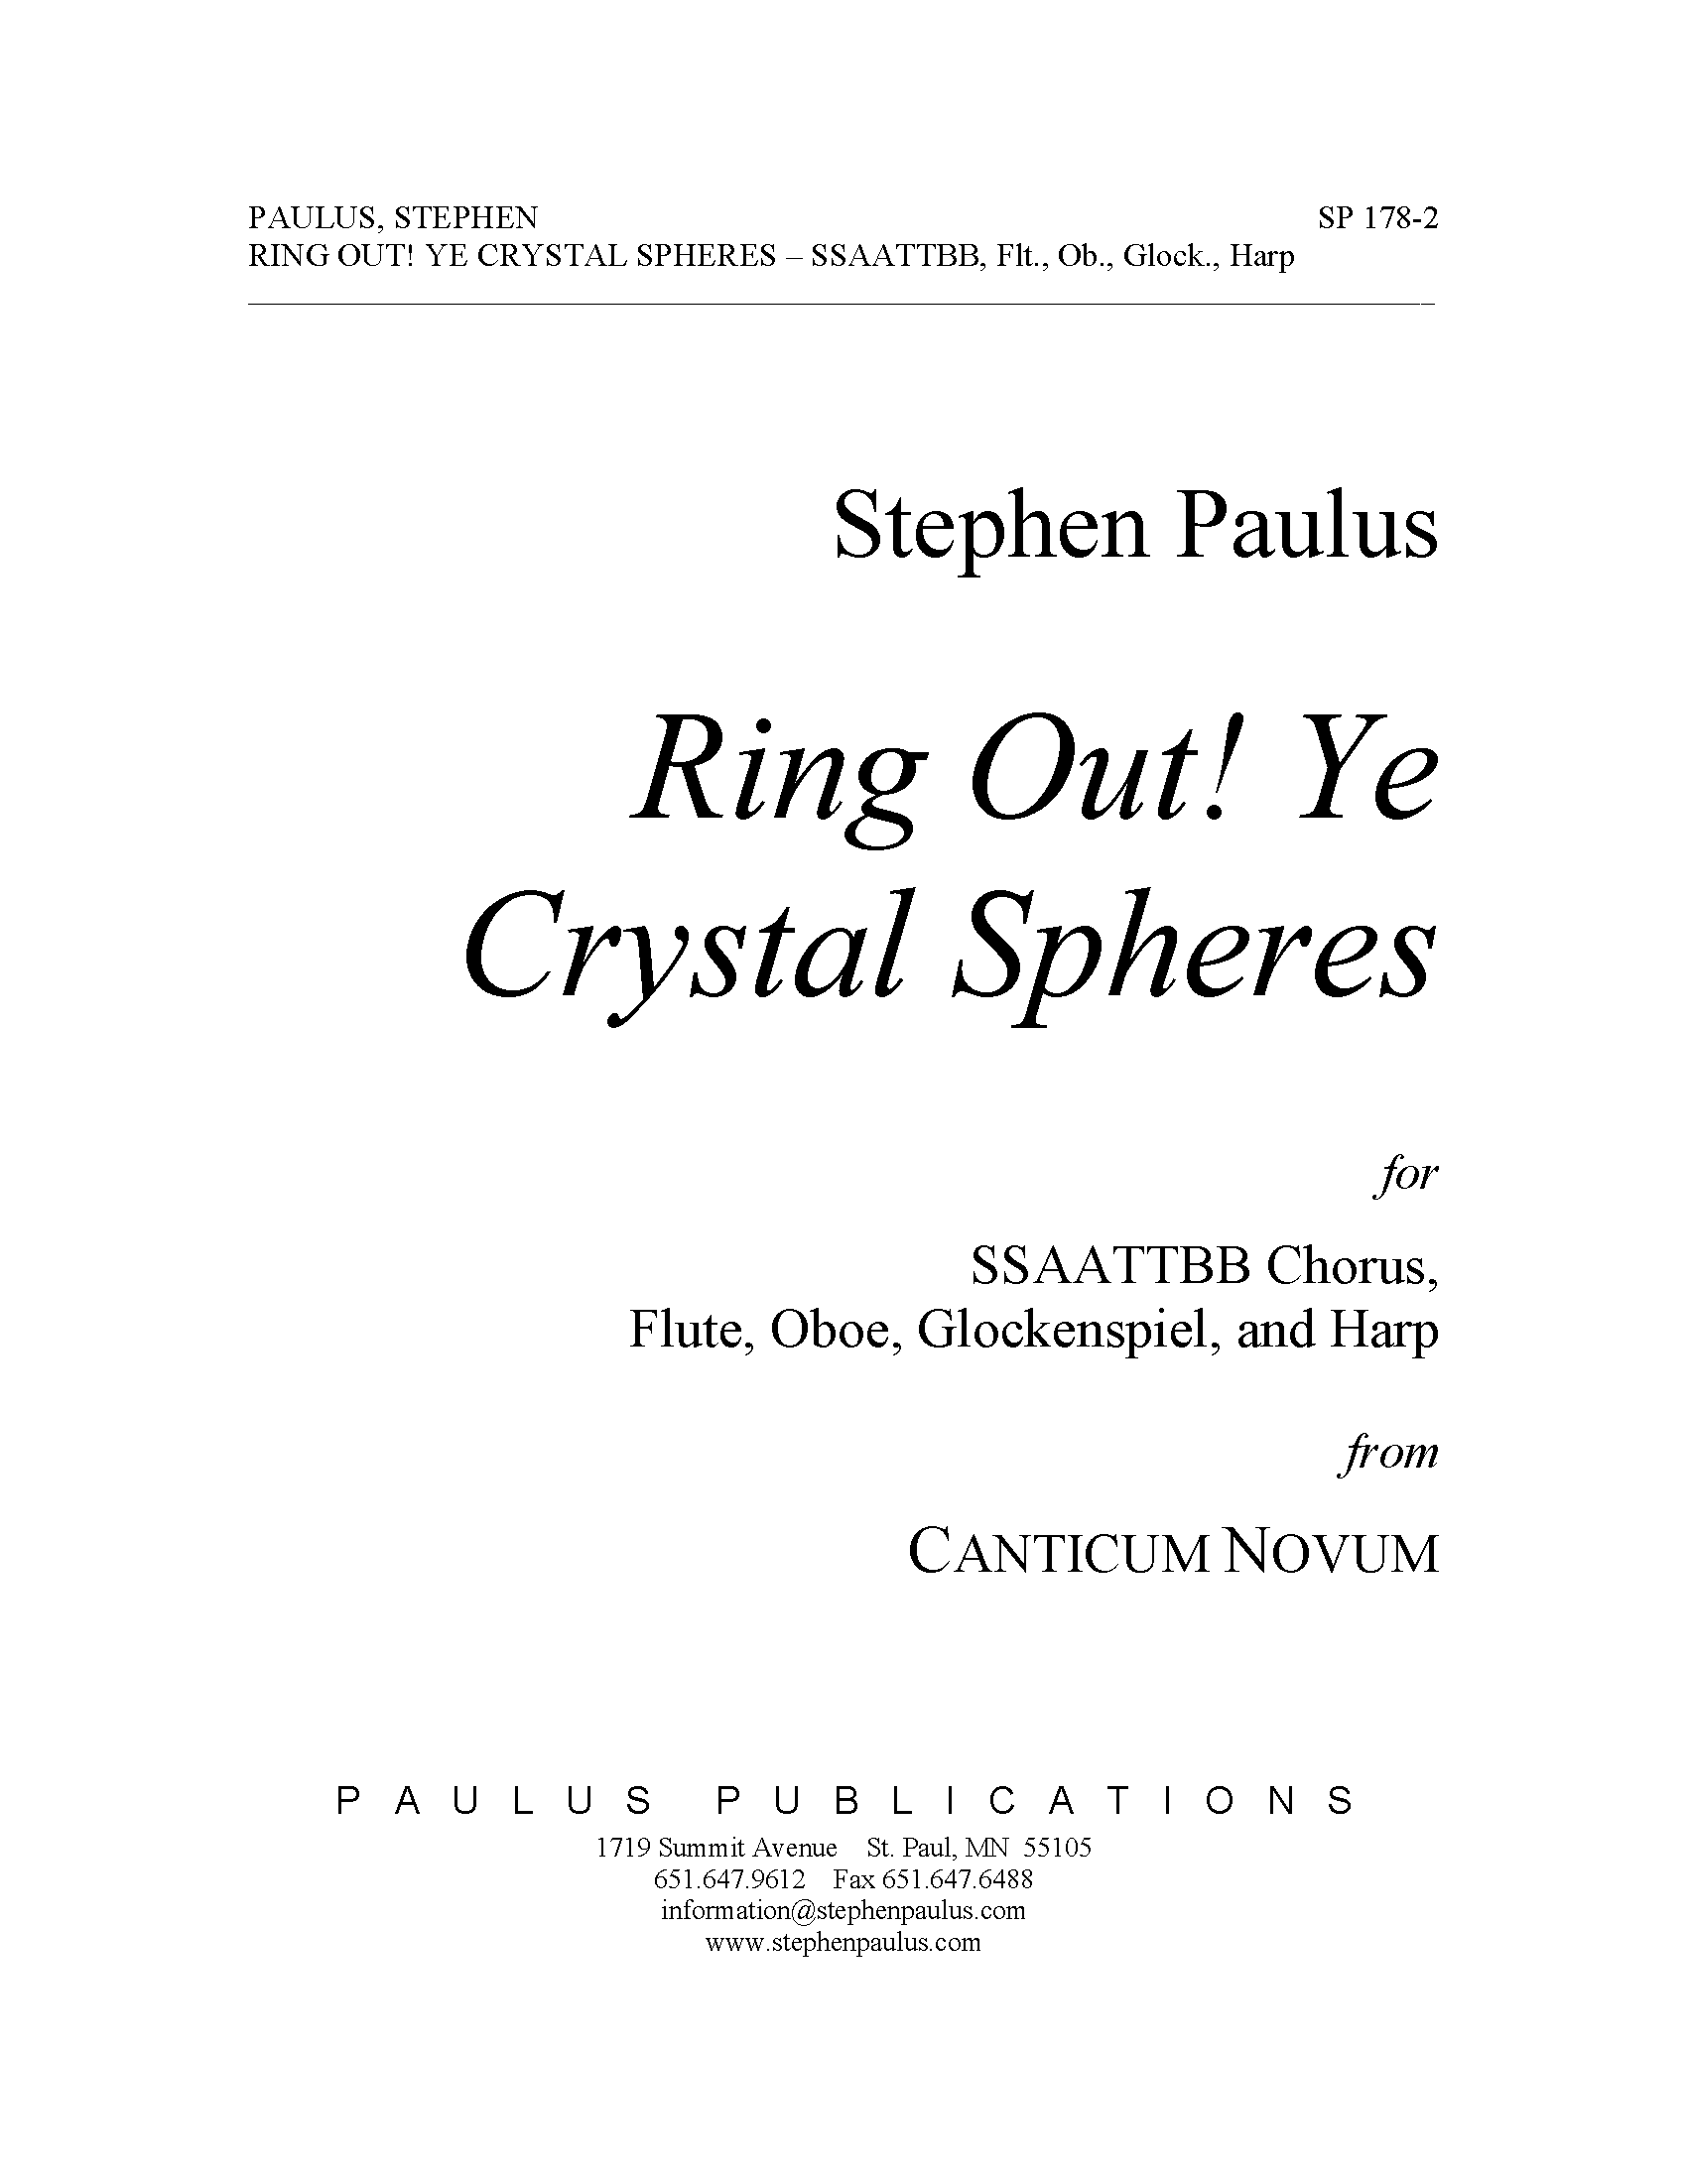 Ring Out! Ye Crystal Spheres (from Canticum Novum) for SSAATTBB Chorus, Flute, Oboe, Glockenspiel & Harp